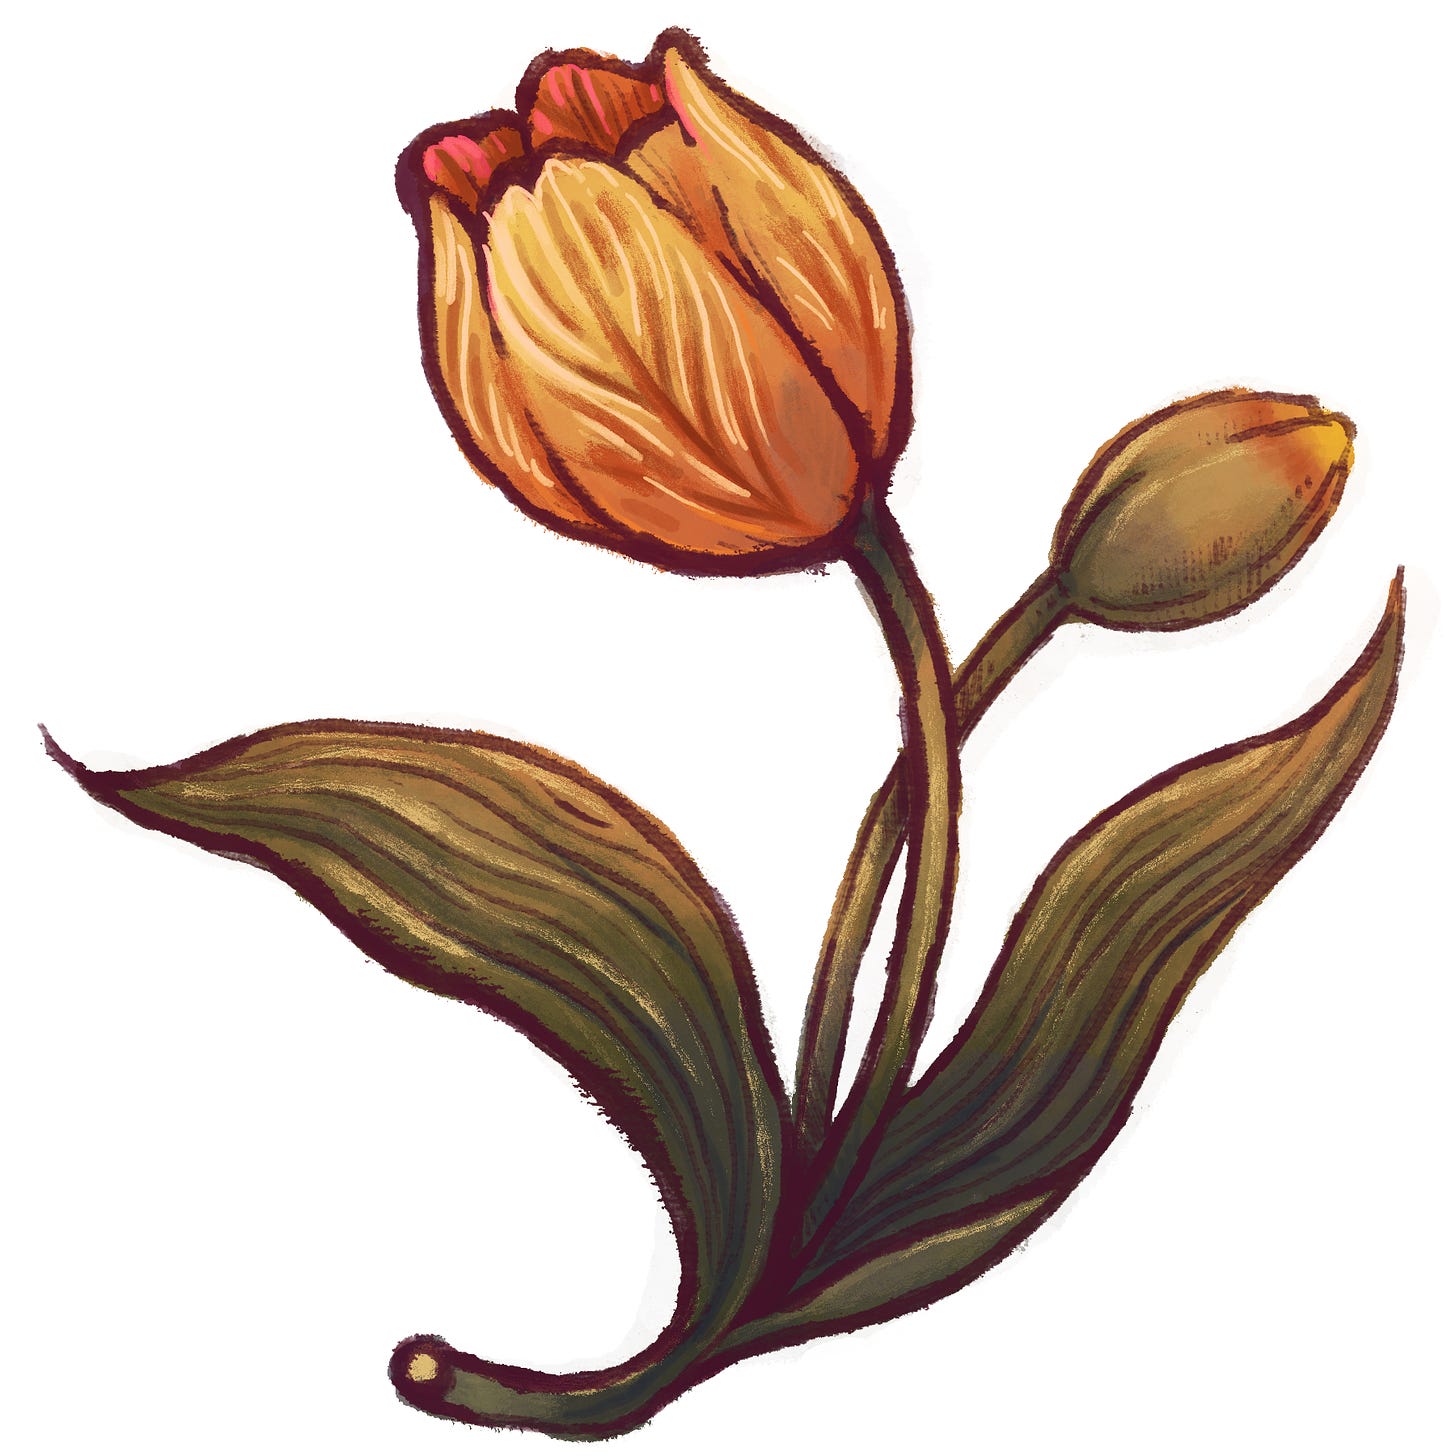 a handmade digital illustration of a stylized orange tulip